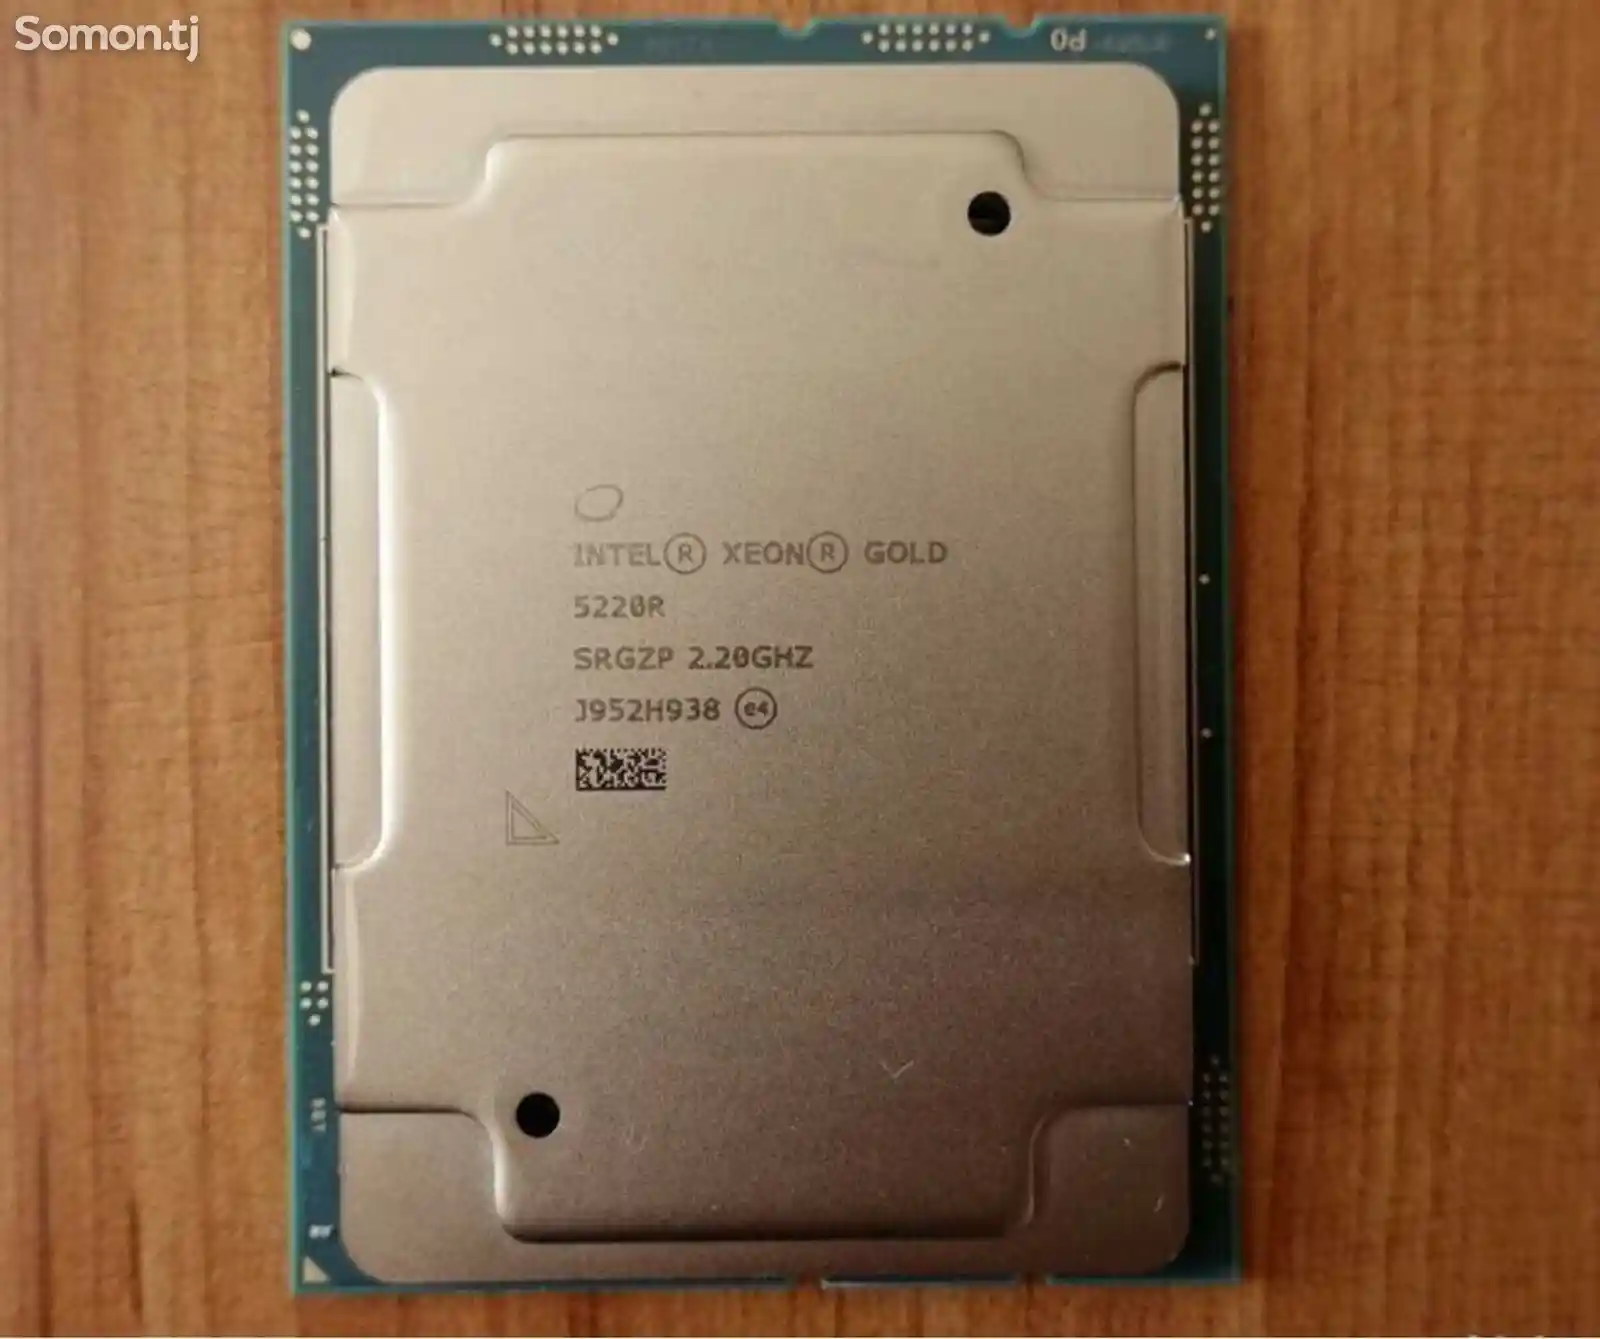 Серверный процессор Xeon Gold 5220R 24 core 2.2-4ghz